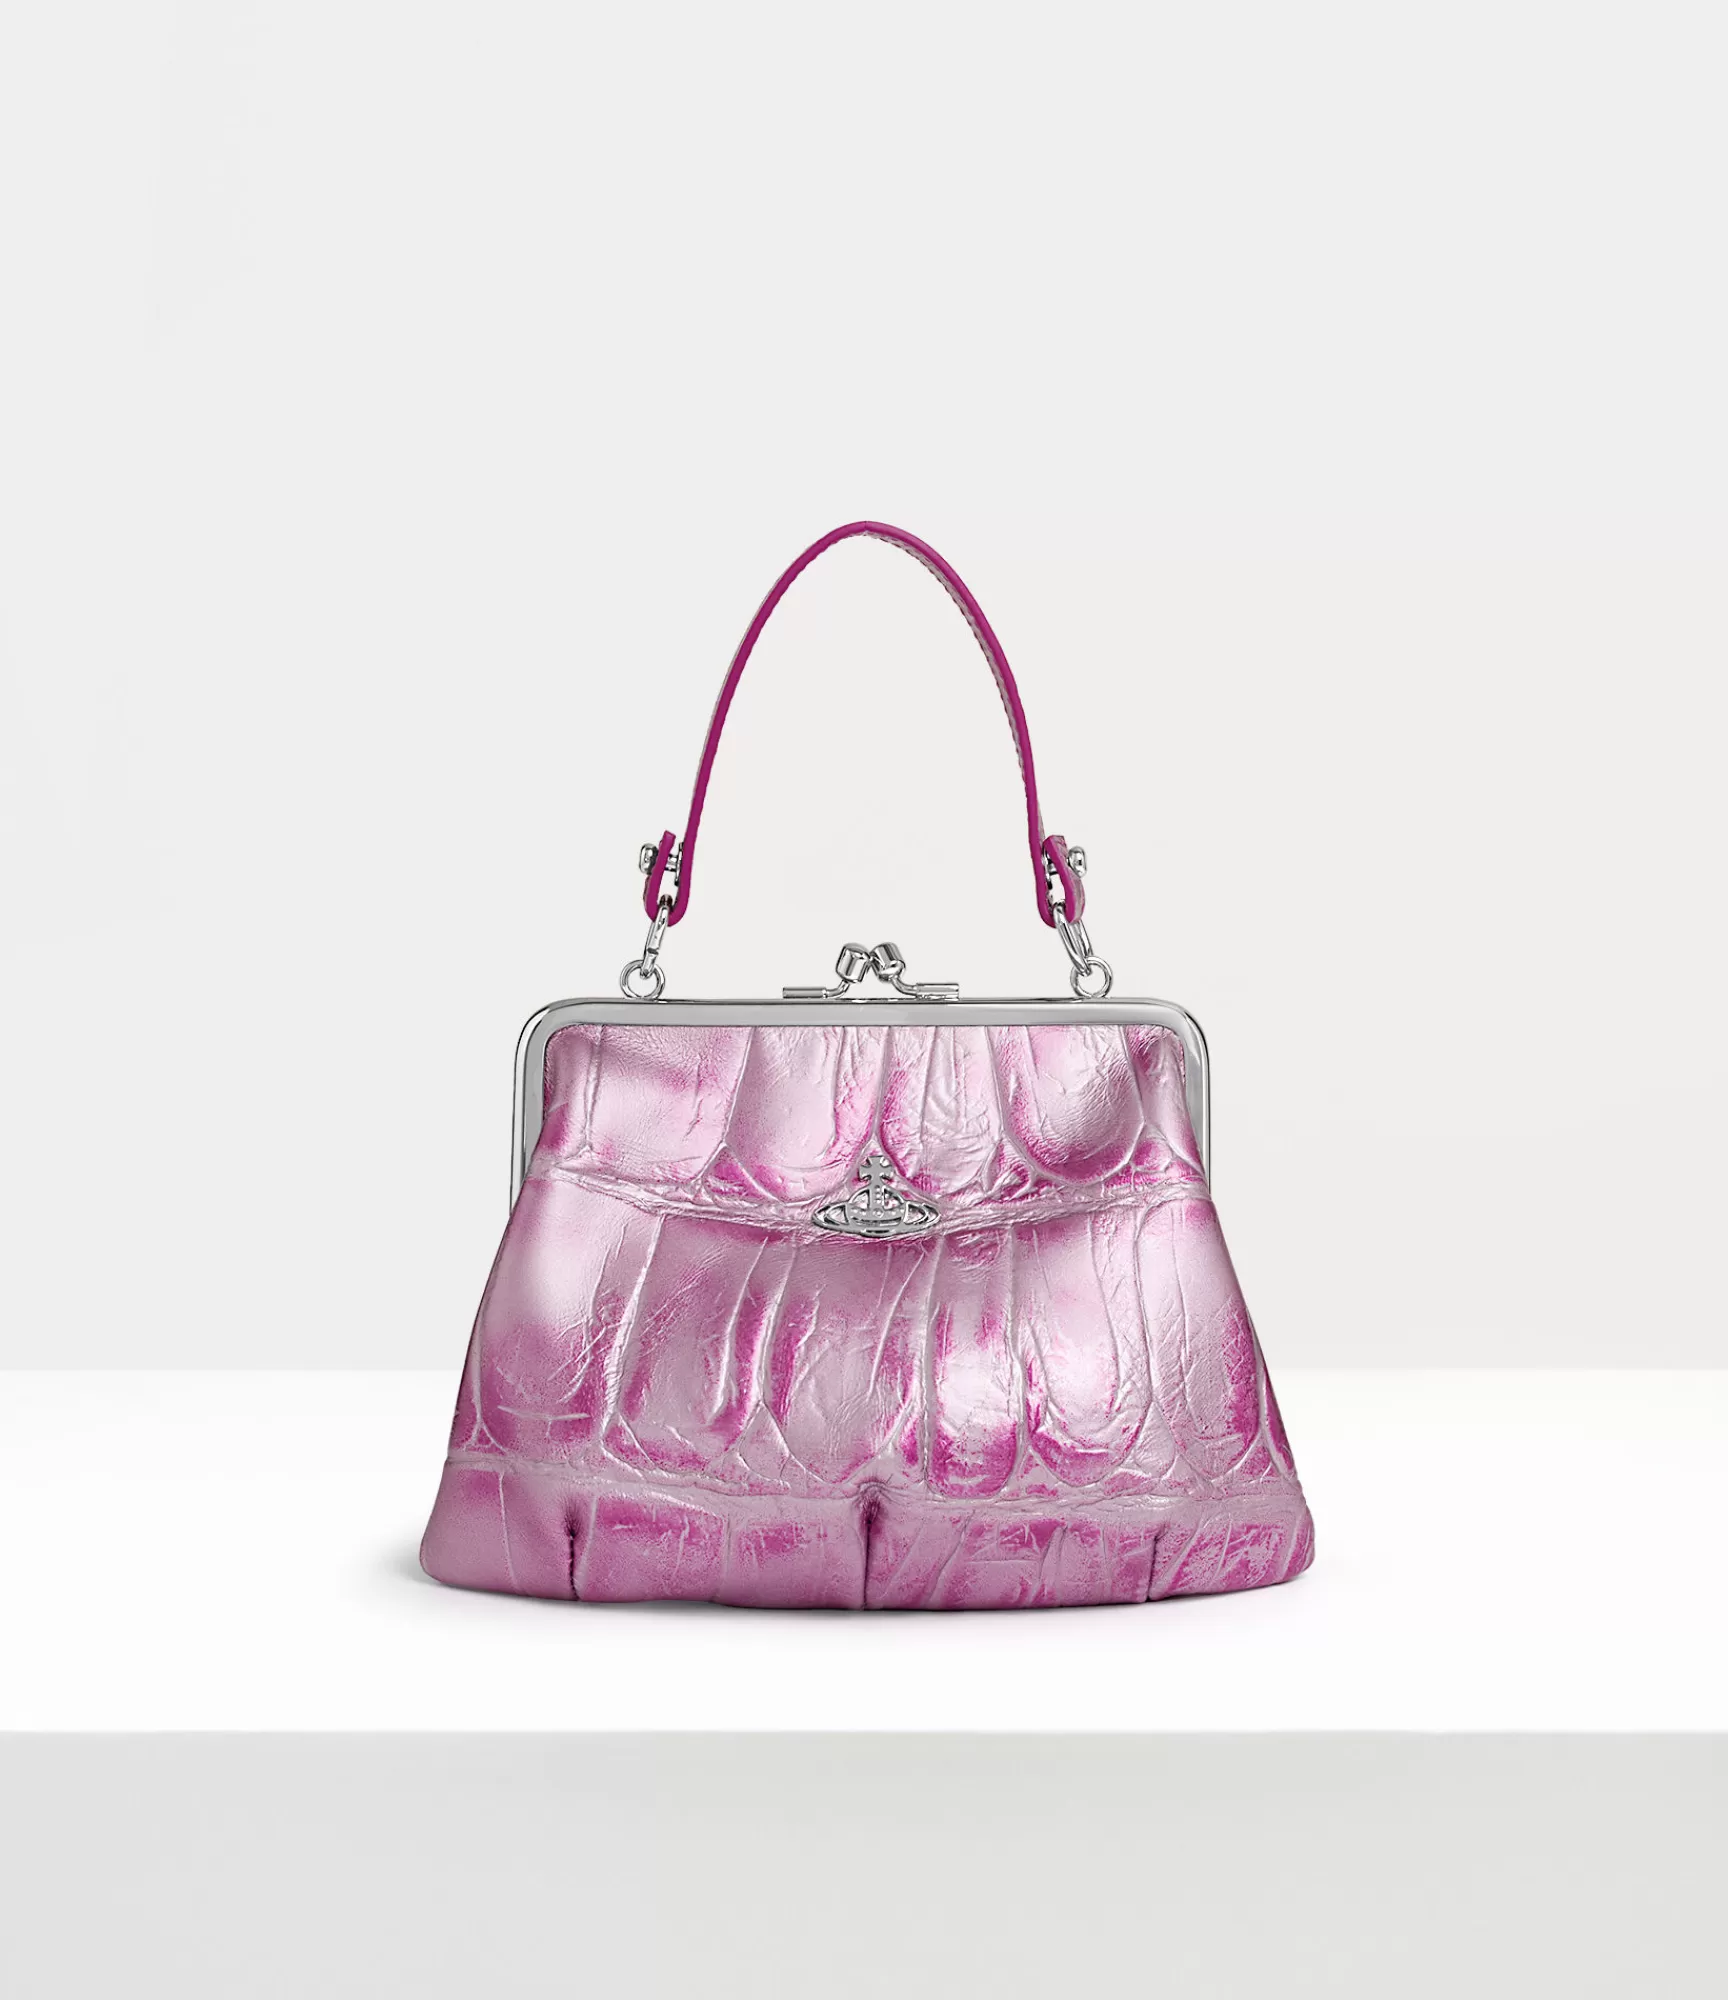 Vivienne Westwood Handbags*Granny frame purse Pink